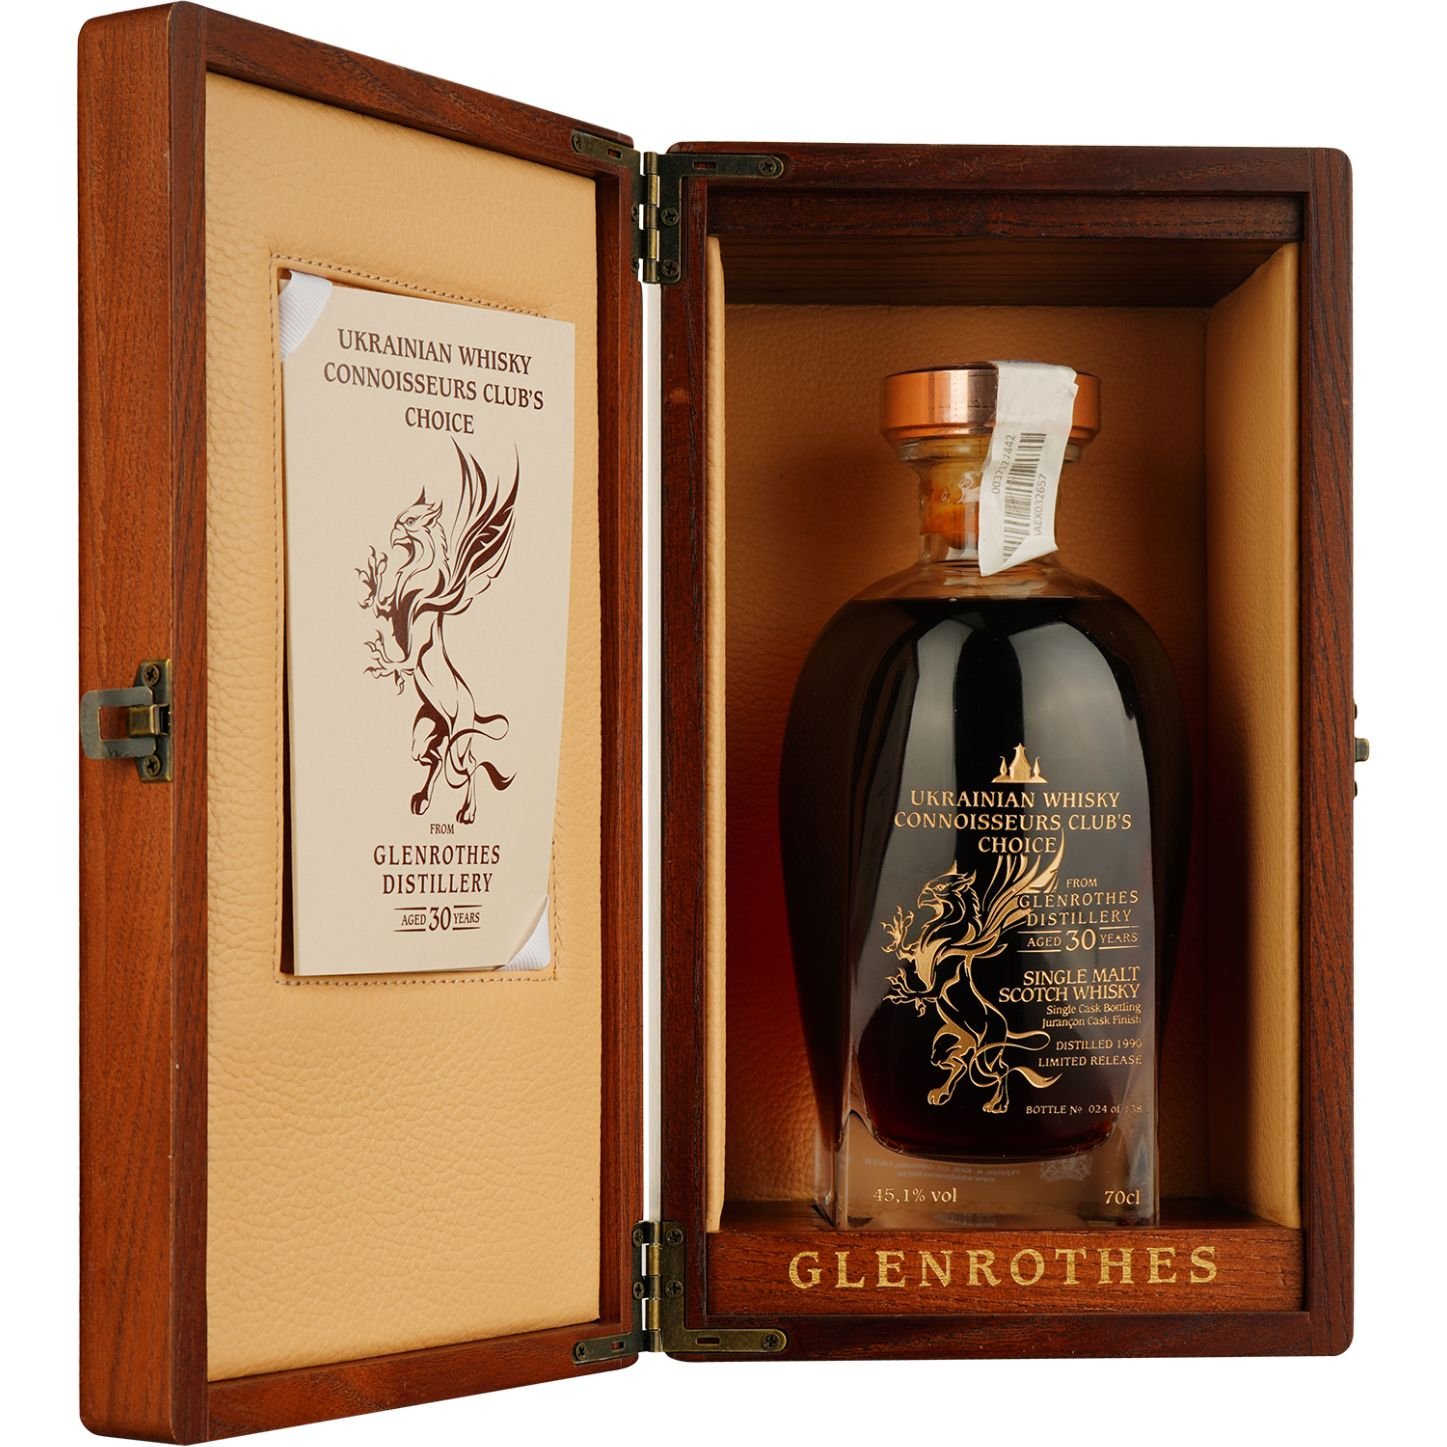 Виски Glenrothes 30 Years Old Jurancon Single Malt Scotch Whisky, в подарочной упаковке, 45,1%, 0,7 л - фото 2